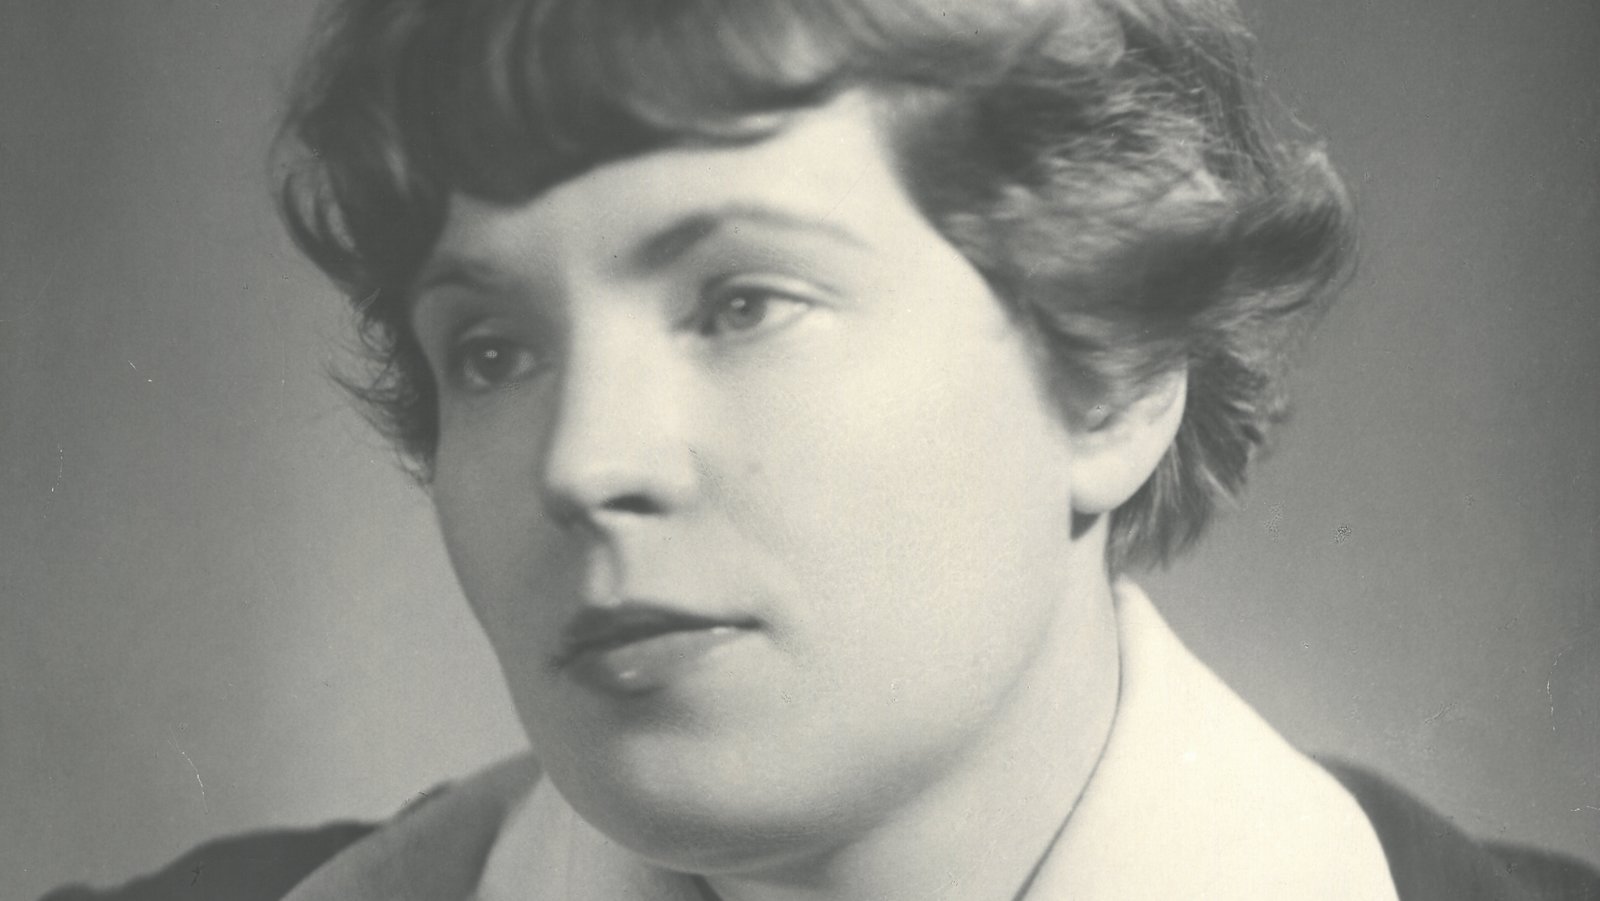 Galina Ustvolskaya black and white headshot from the 1950s